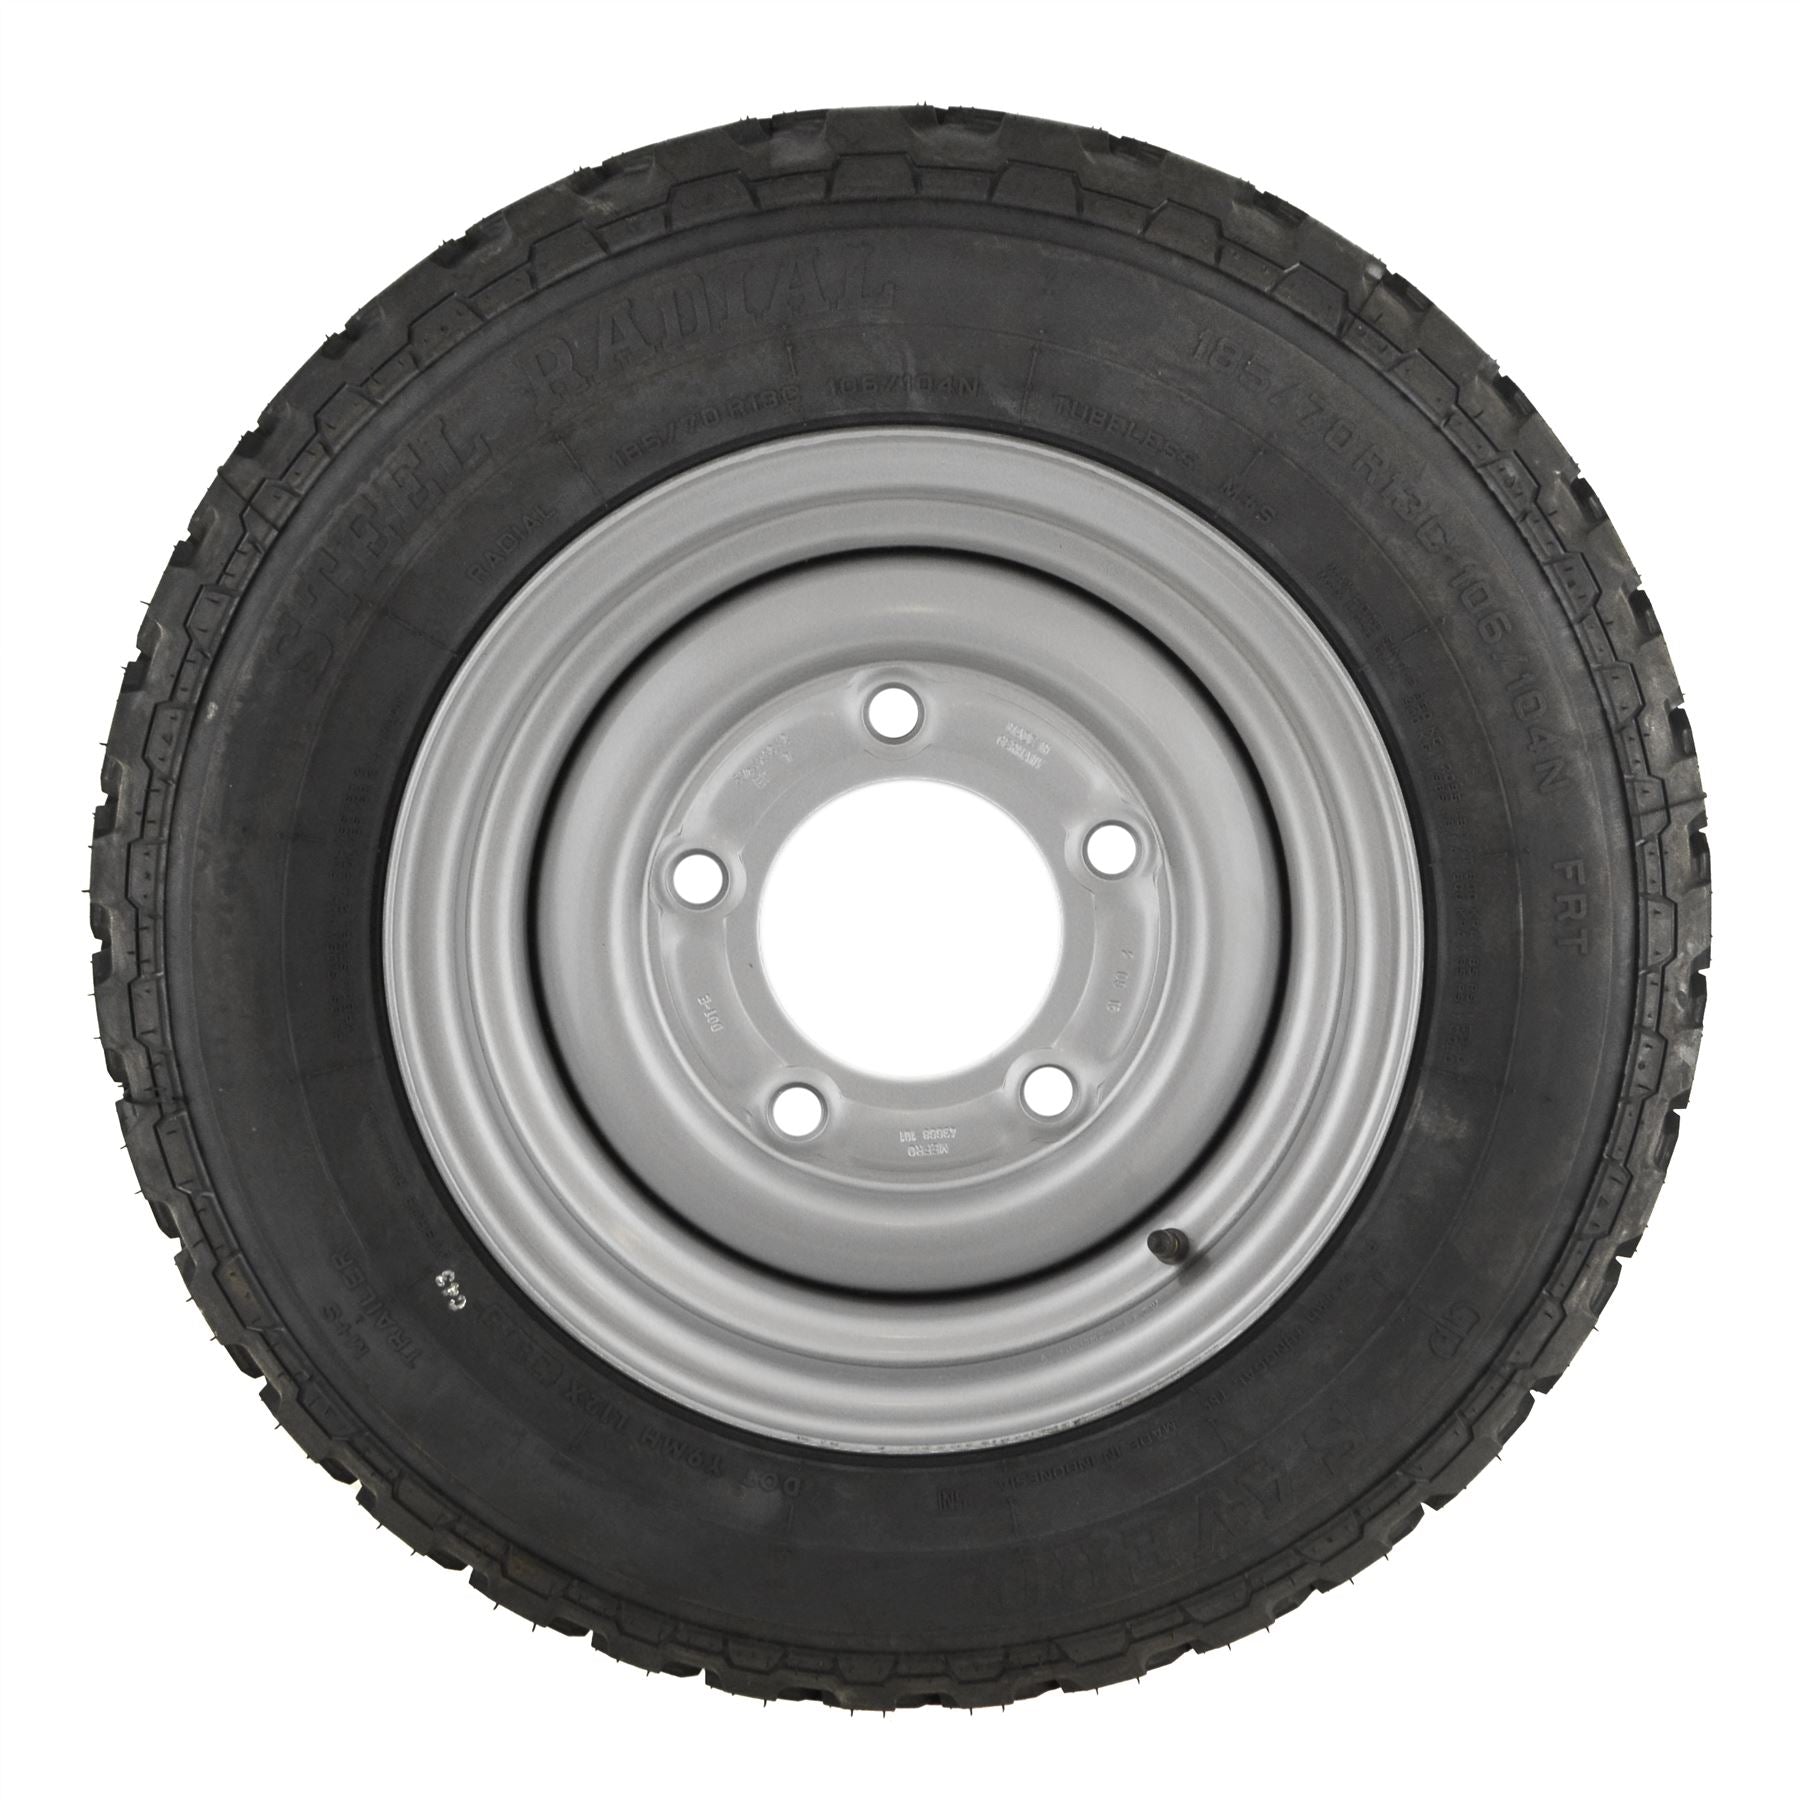 13" Wheel & Tyre for Indespension 3500kg Plant Trailer 185/70 R13